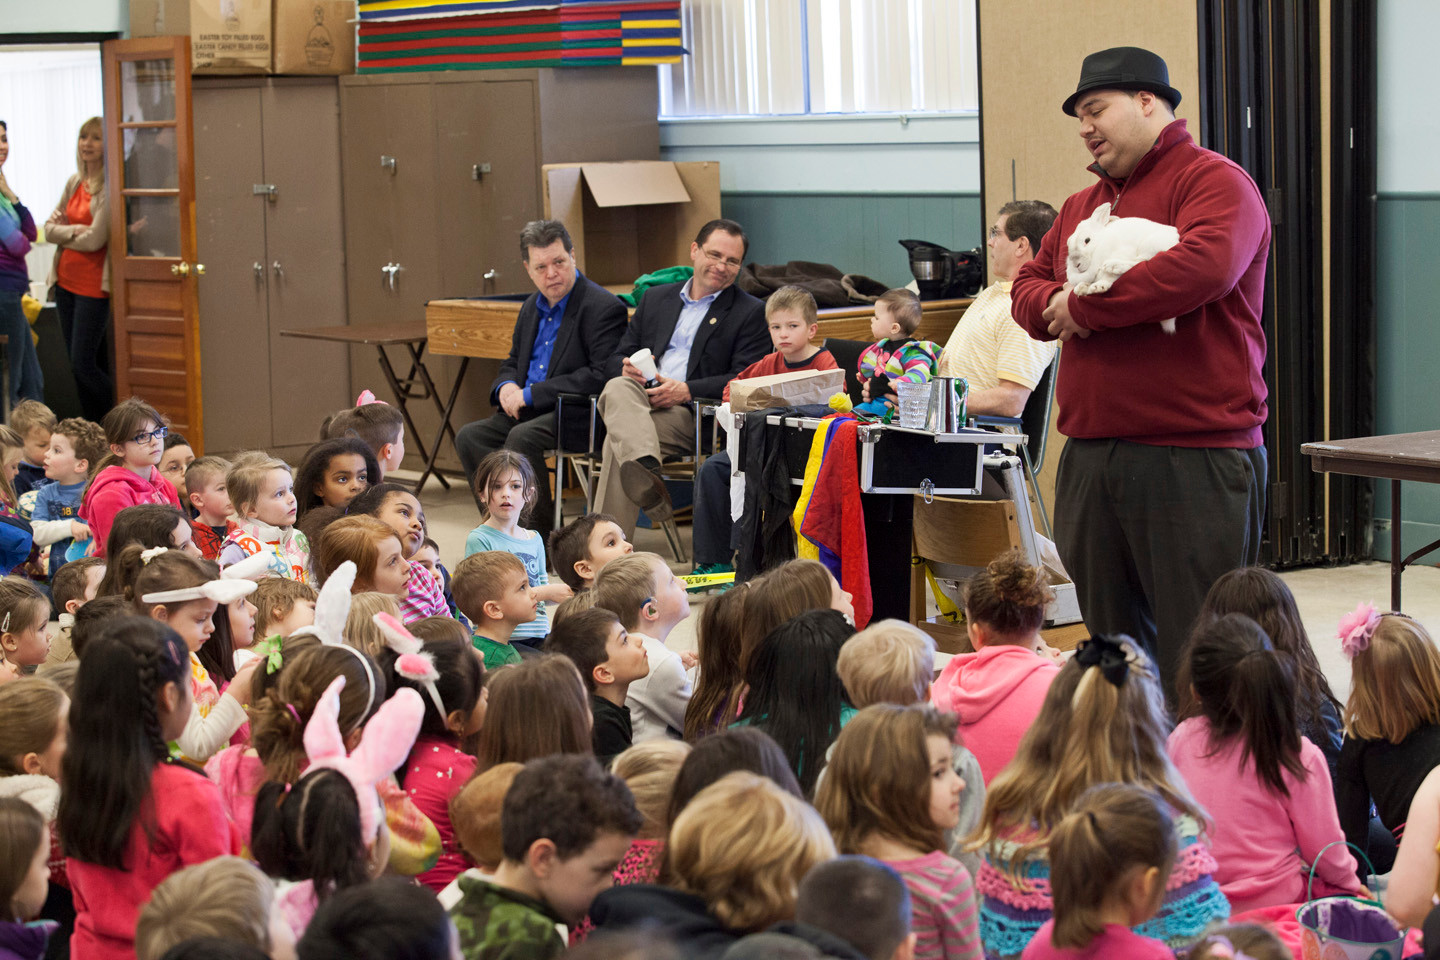 MAGICIAN JAMES GAVIN 
performed some tricks for the children.